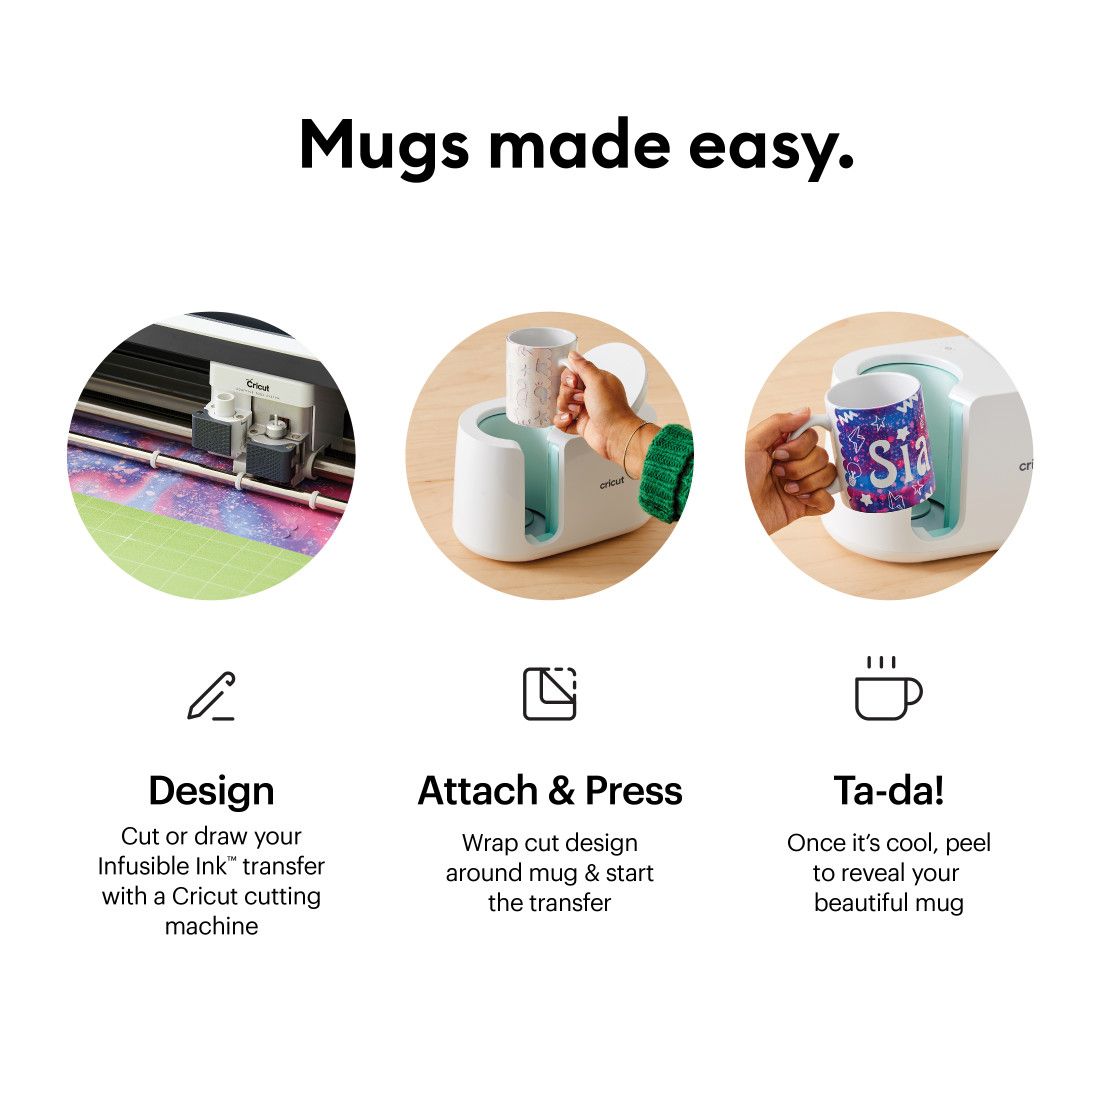 Cricut Mug Press™ + Everything Materials Bundle